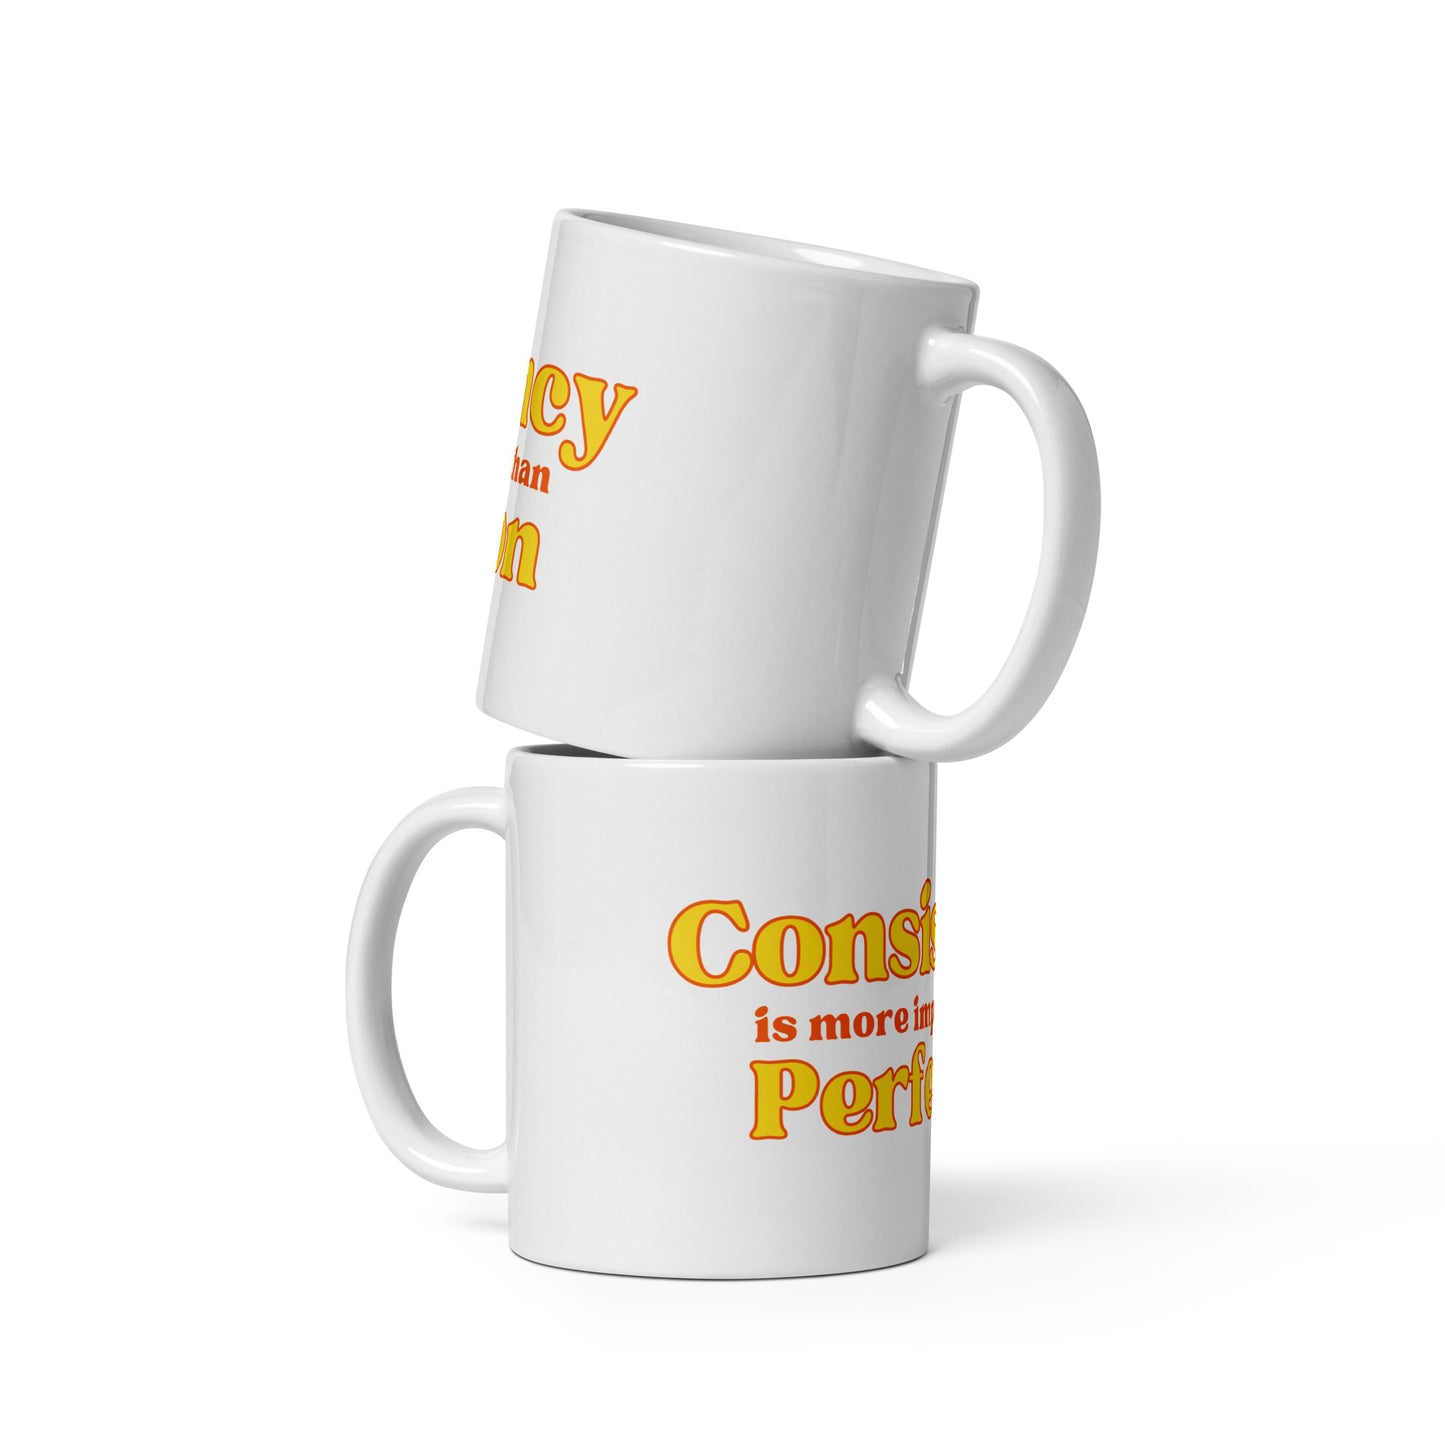 "Consistency Over Perfection" Coffee Mug